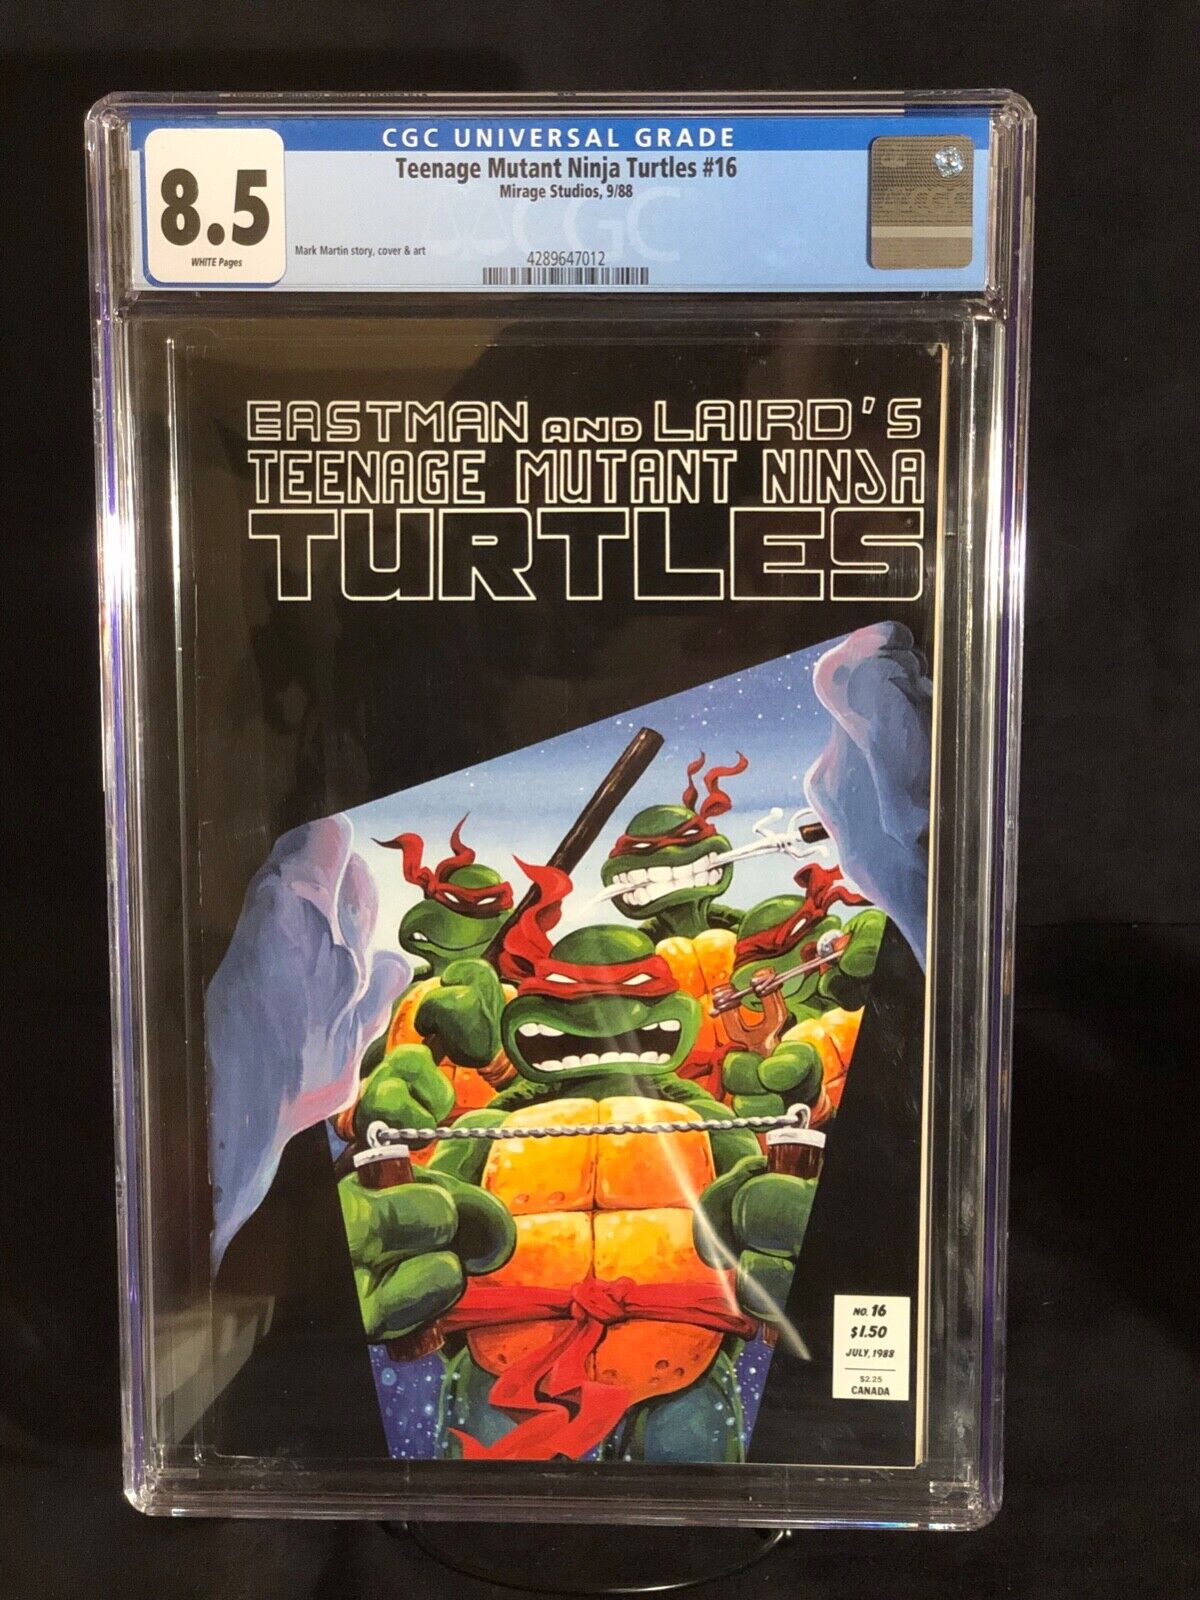 Teenage Mutant Ninja Turtles #16 1988, White Pages, CGC 8.5 EXTREMELY RARE